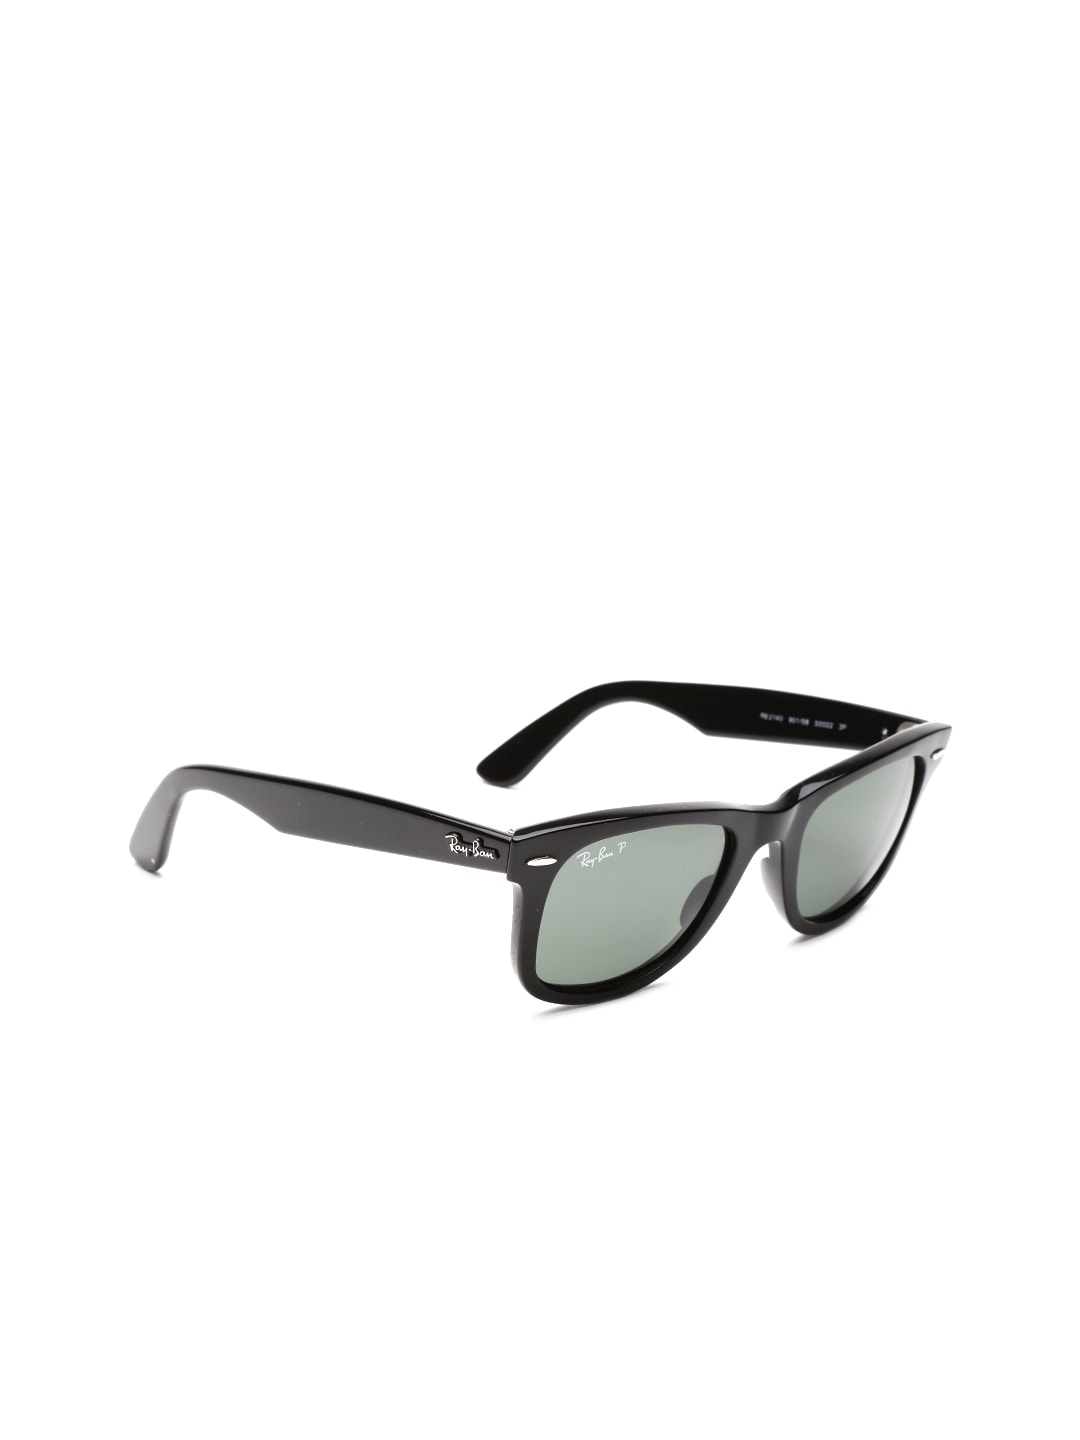 Ray-Ban Unisex Wayfarer Sunglasses 0RB2140